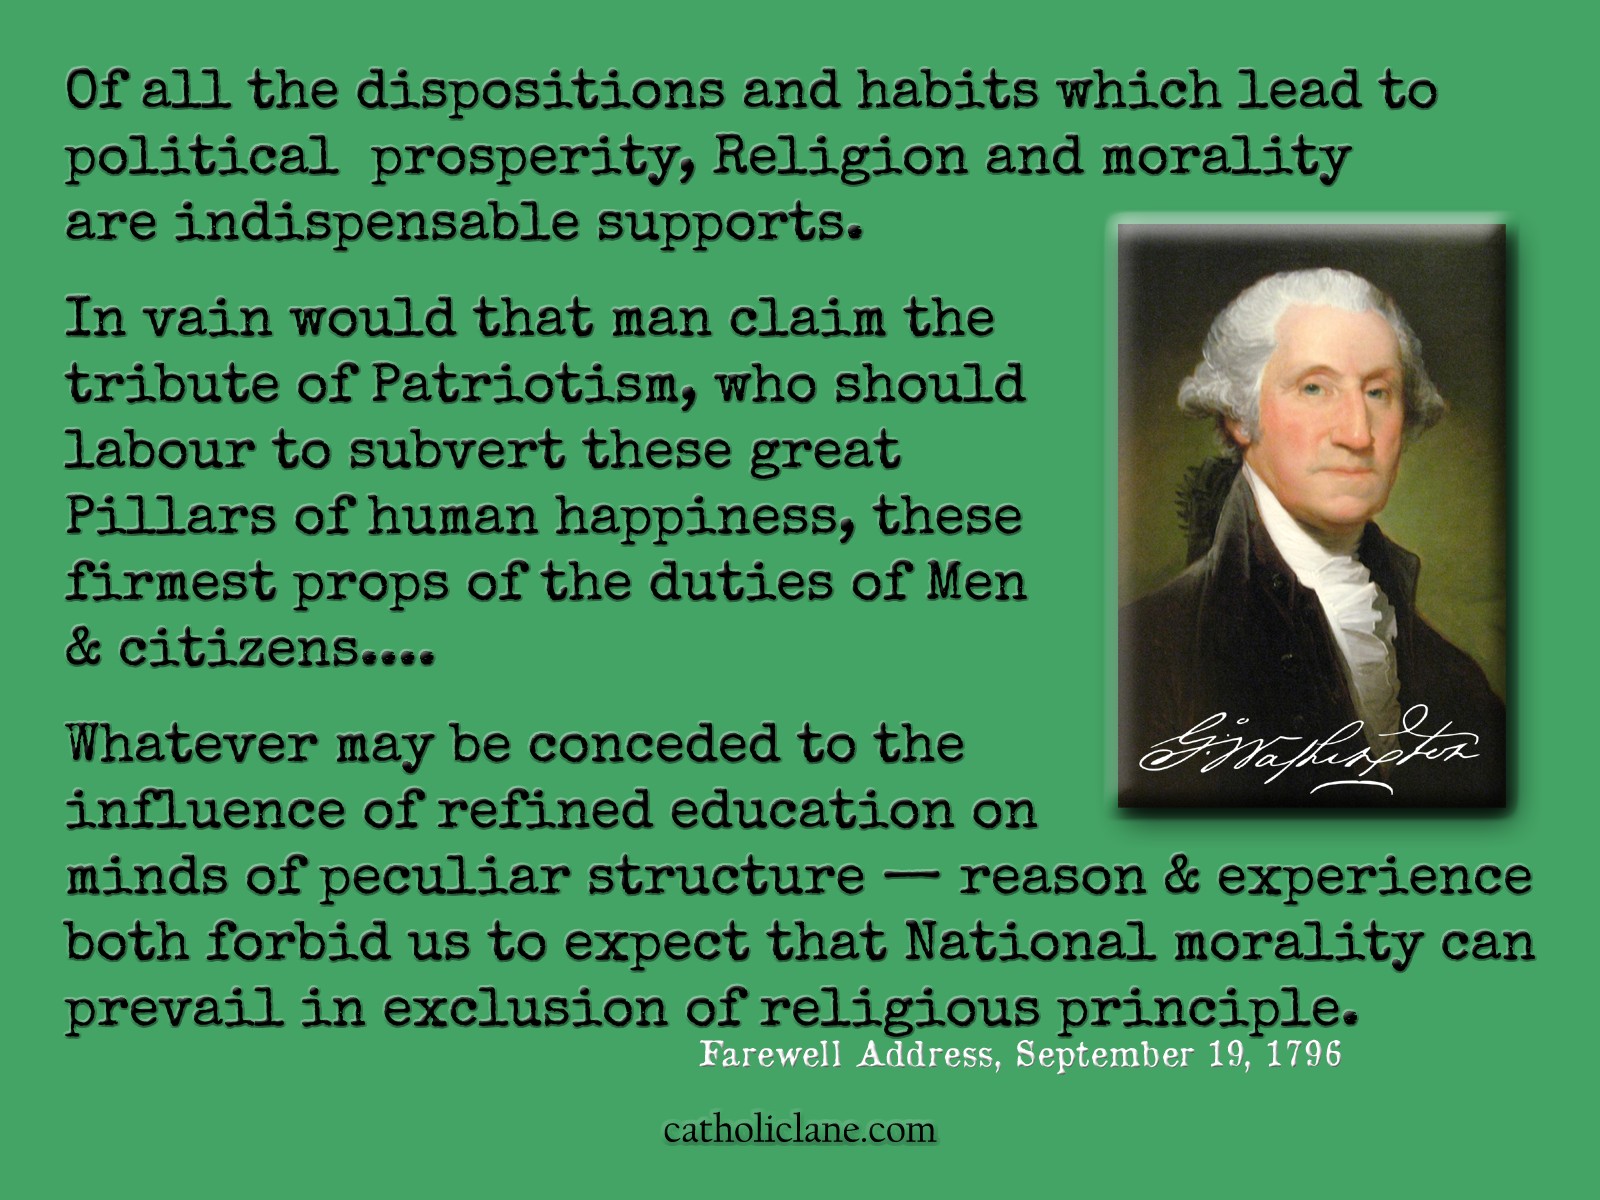 George-Washington-on-Religion-and-Morality.jpg